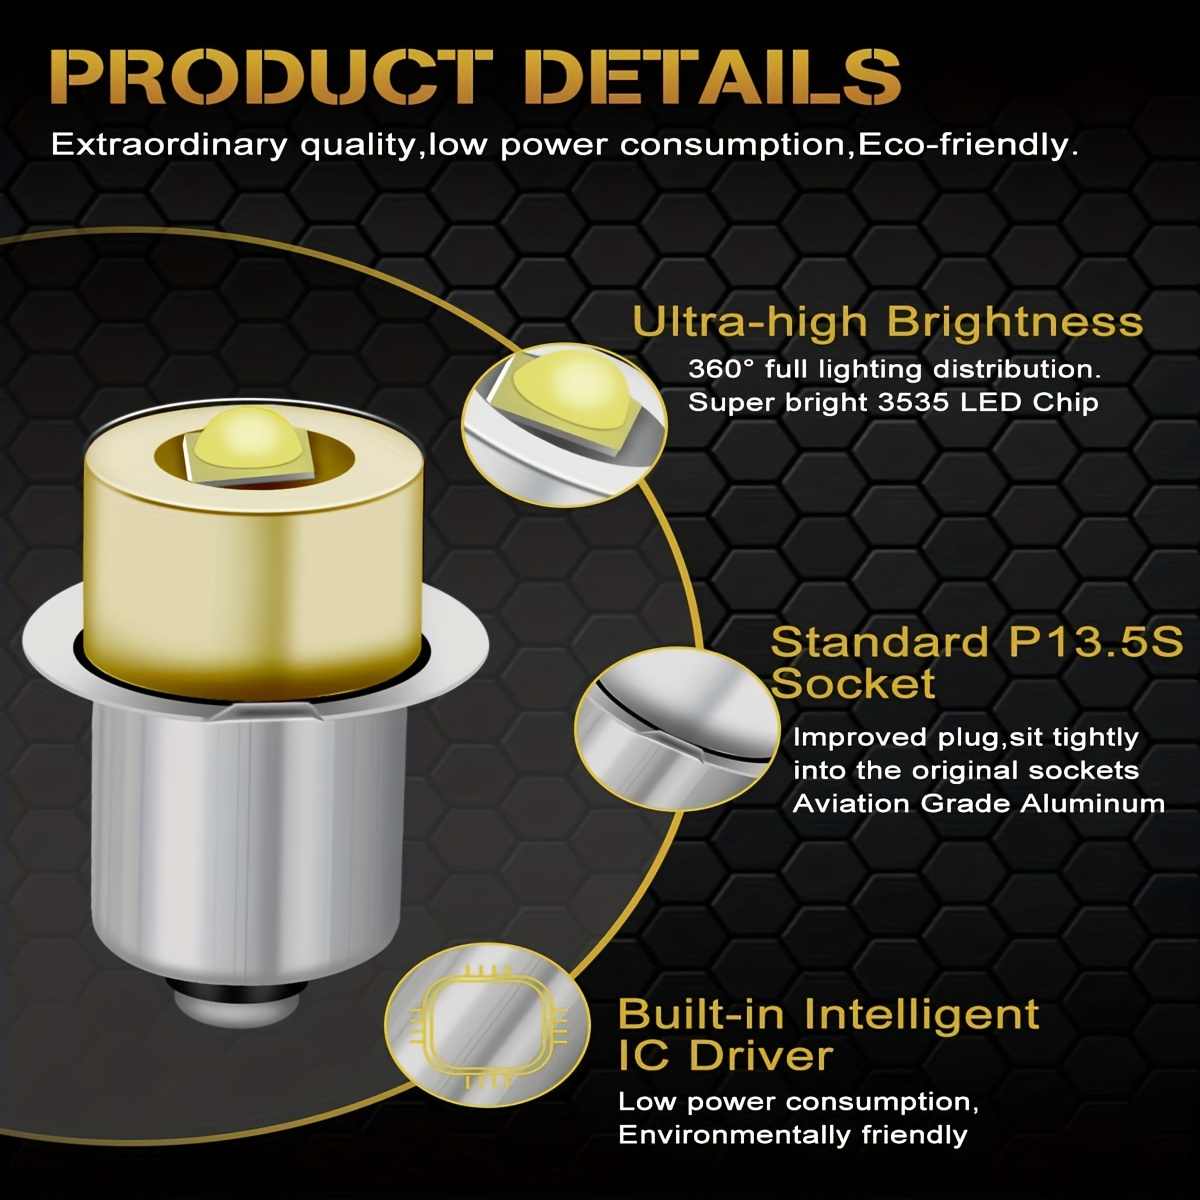 LED Miniature Lamp DC 3V 4'5V 6V 12V 18V 1SMD Flashlight Replacement Bulb'  Q1X4